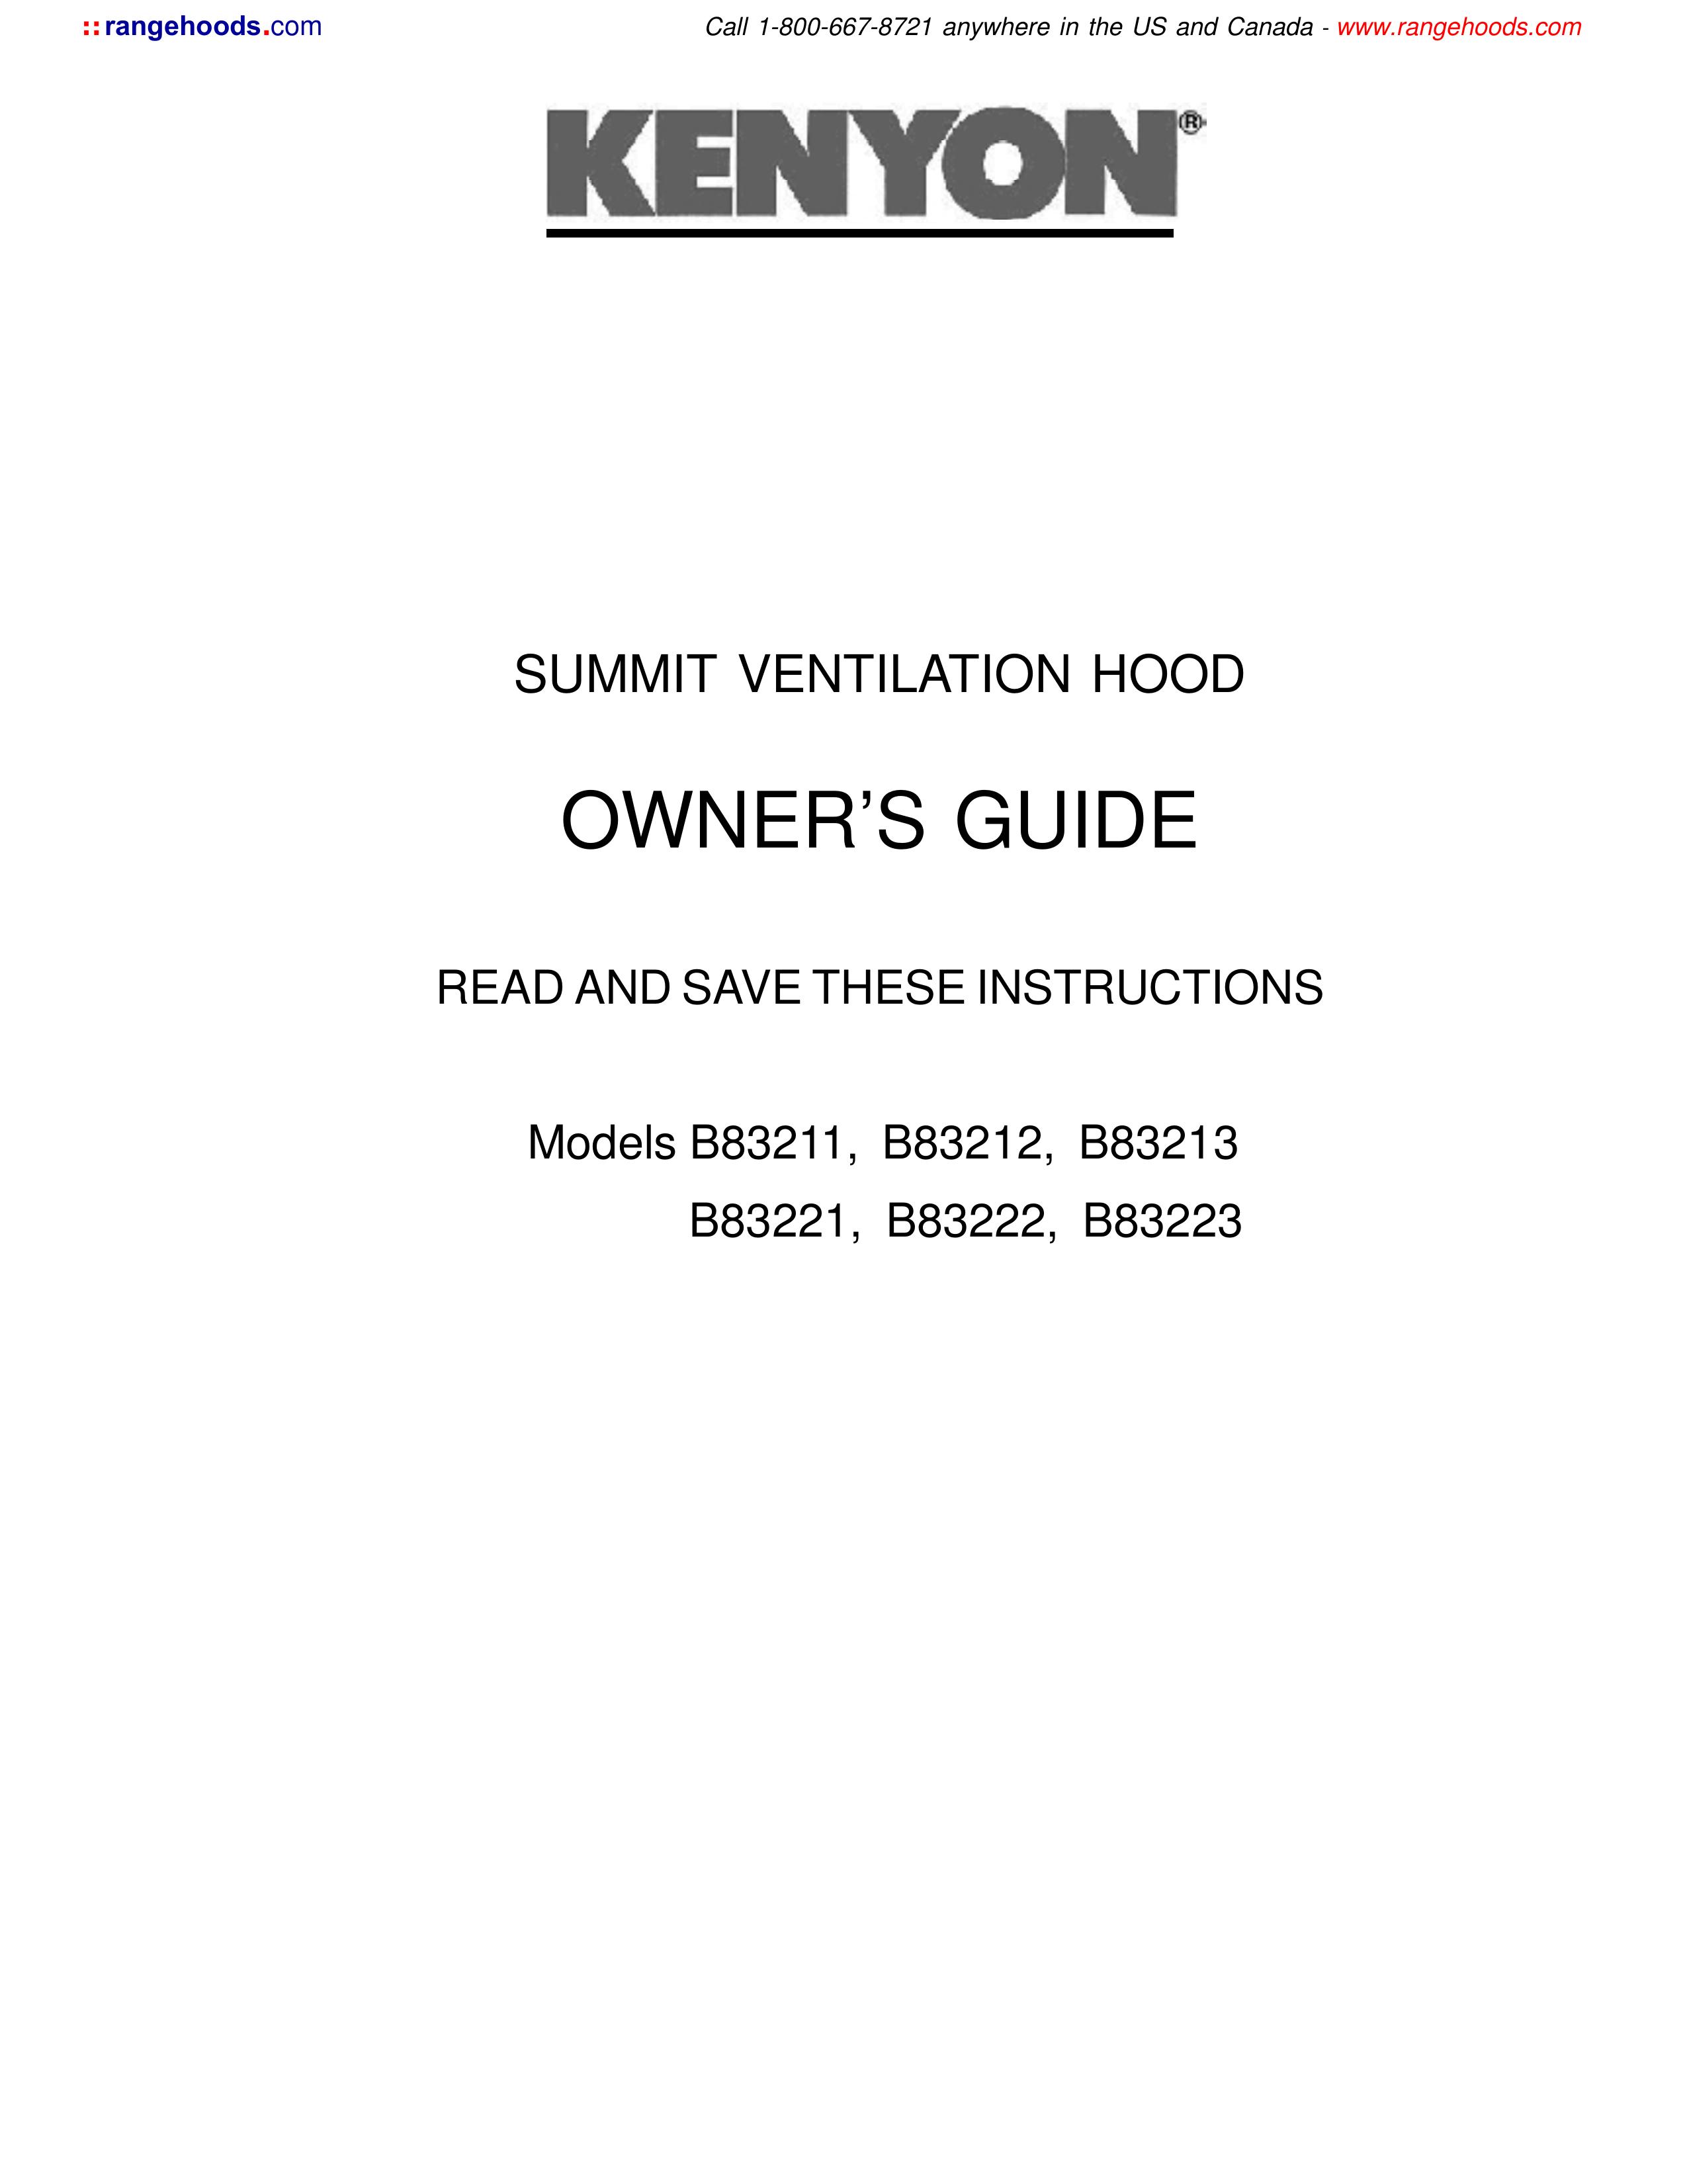 Kenyon B83222 Ventilation Hood User Manual